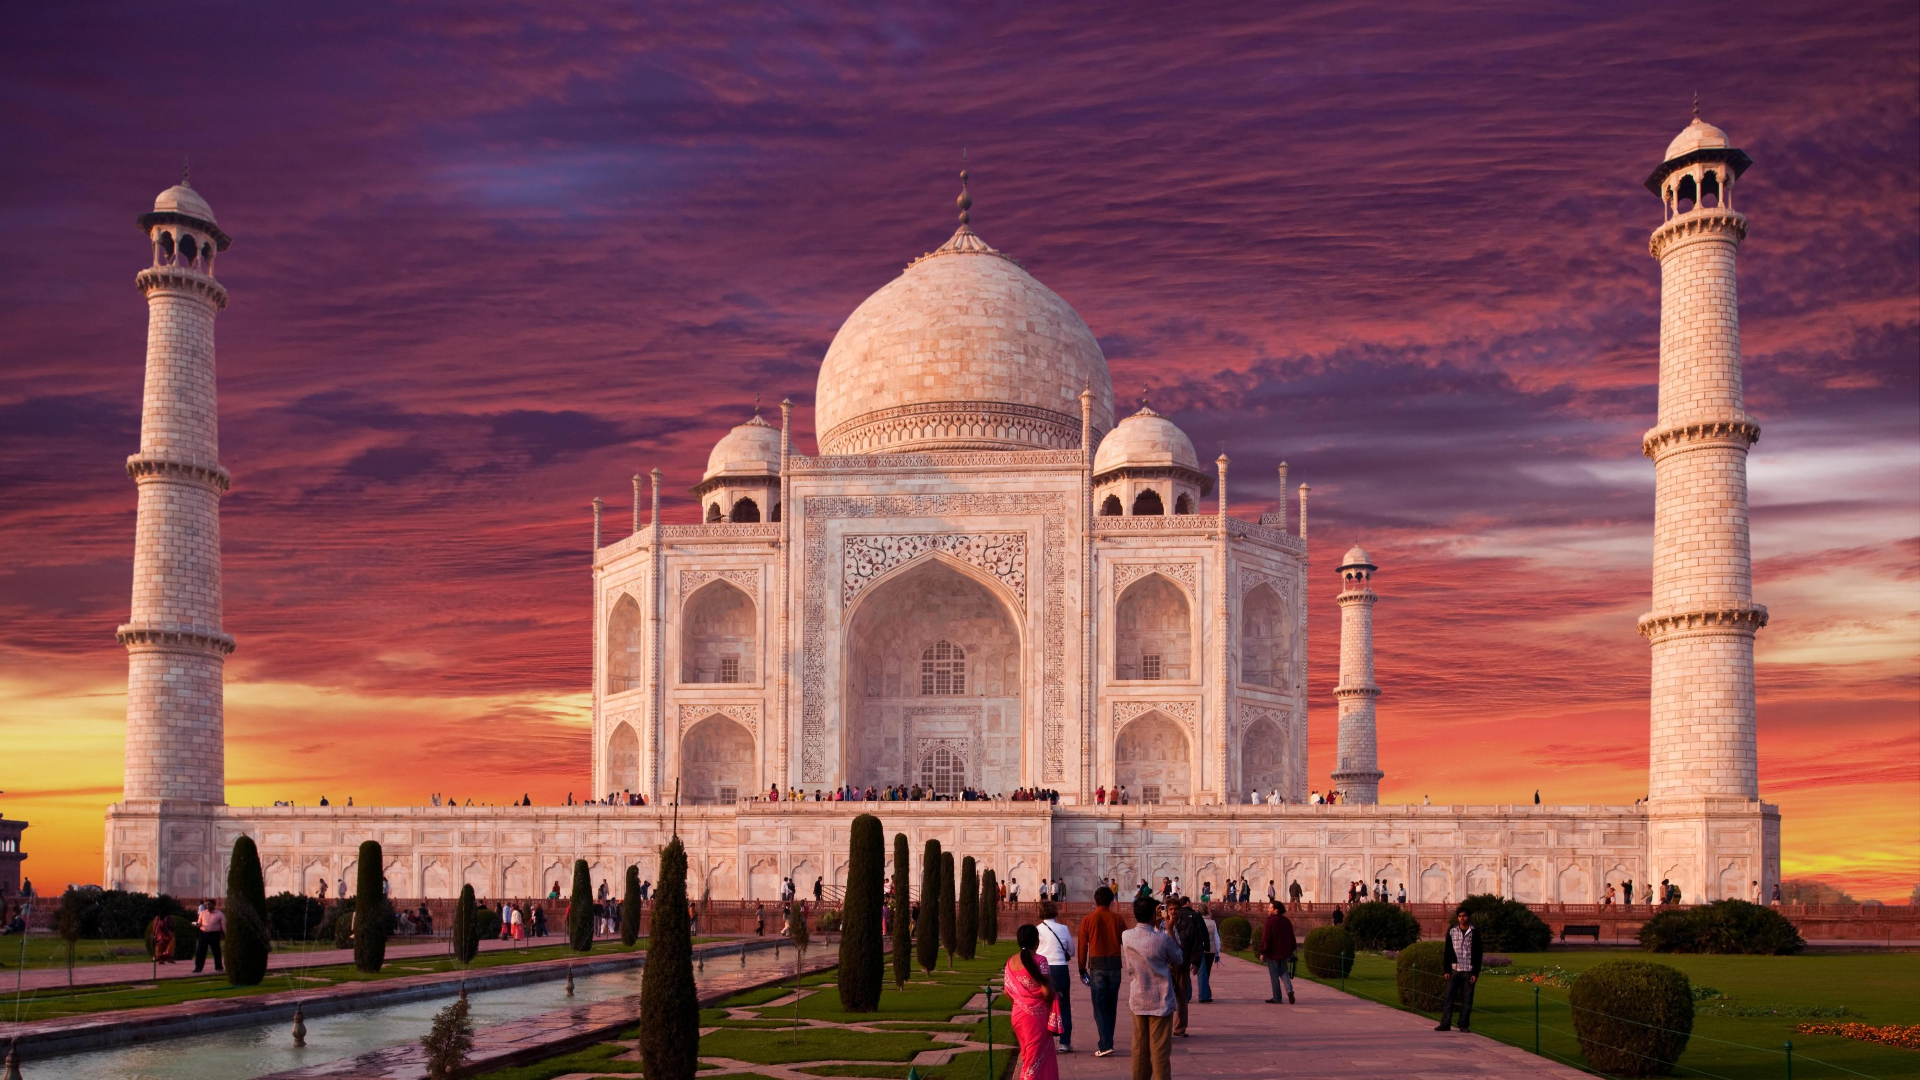 General 1920x1080 landscape clouds sky sunset trees tourist architecture World Heritage Site ancient Taj Mahal India